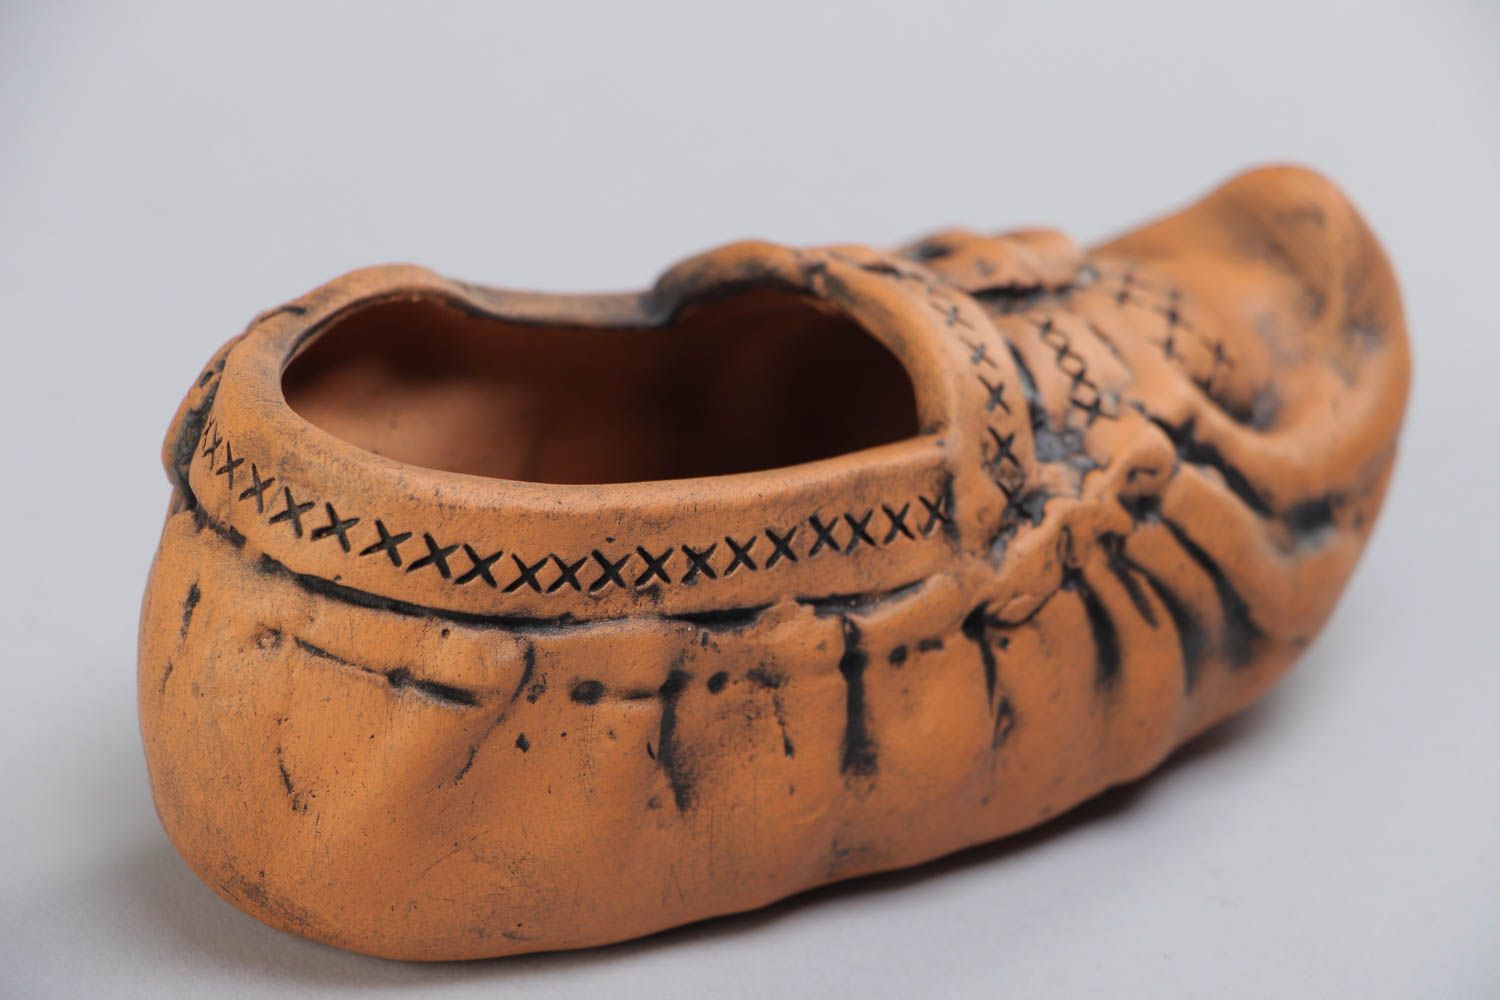 Handmade decorative ceramic ashtray in the shape of shoe kilned with milk photo 4